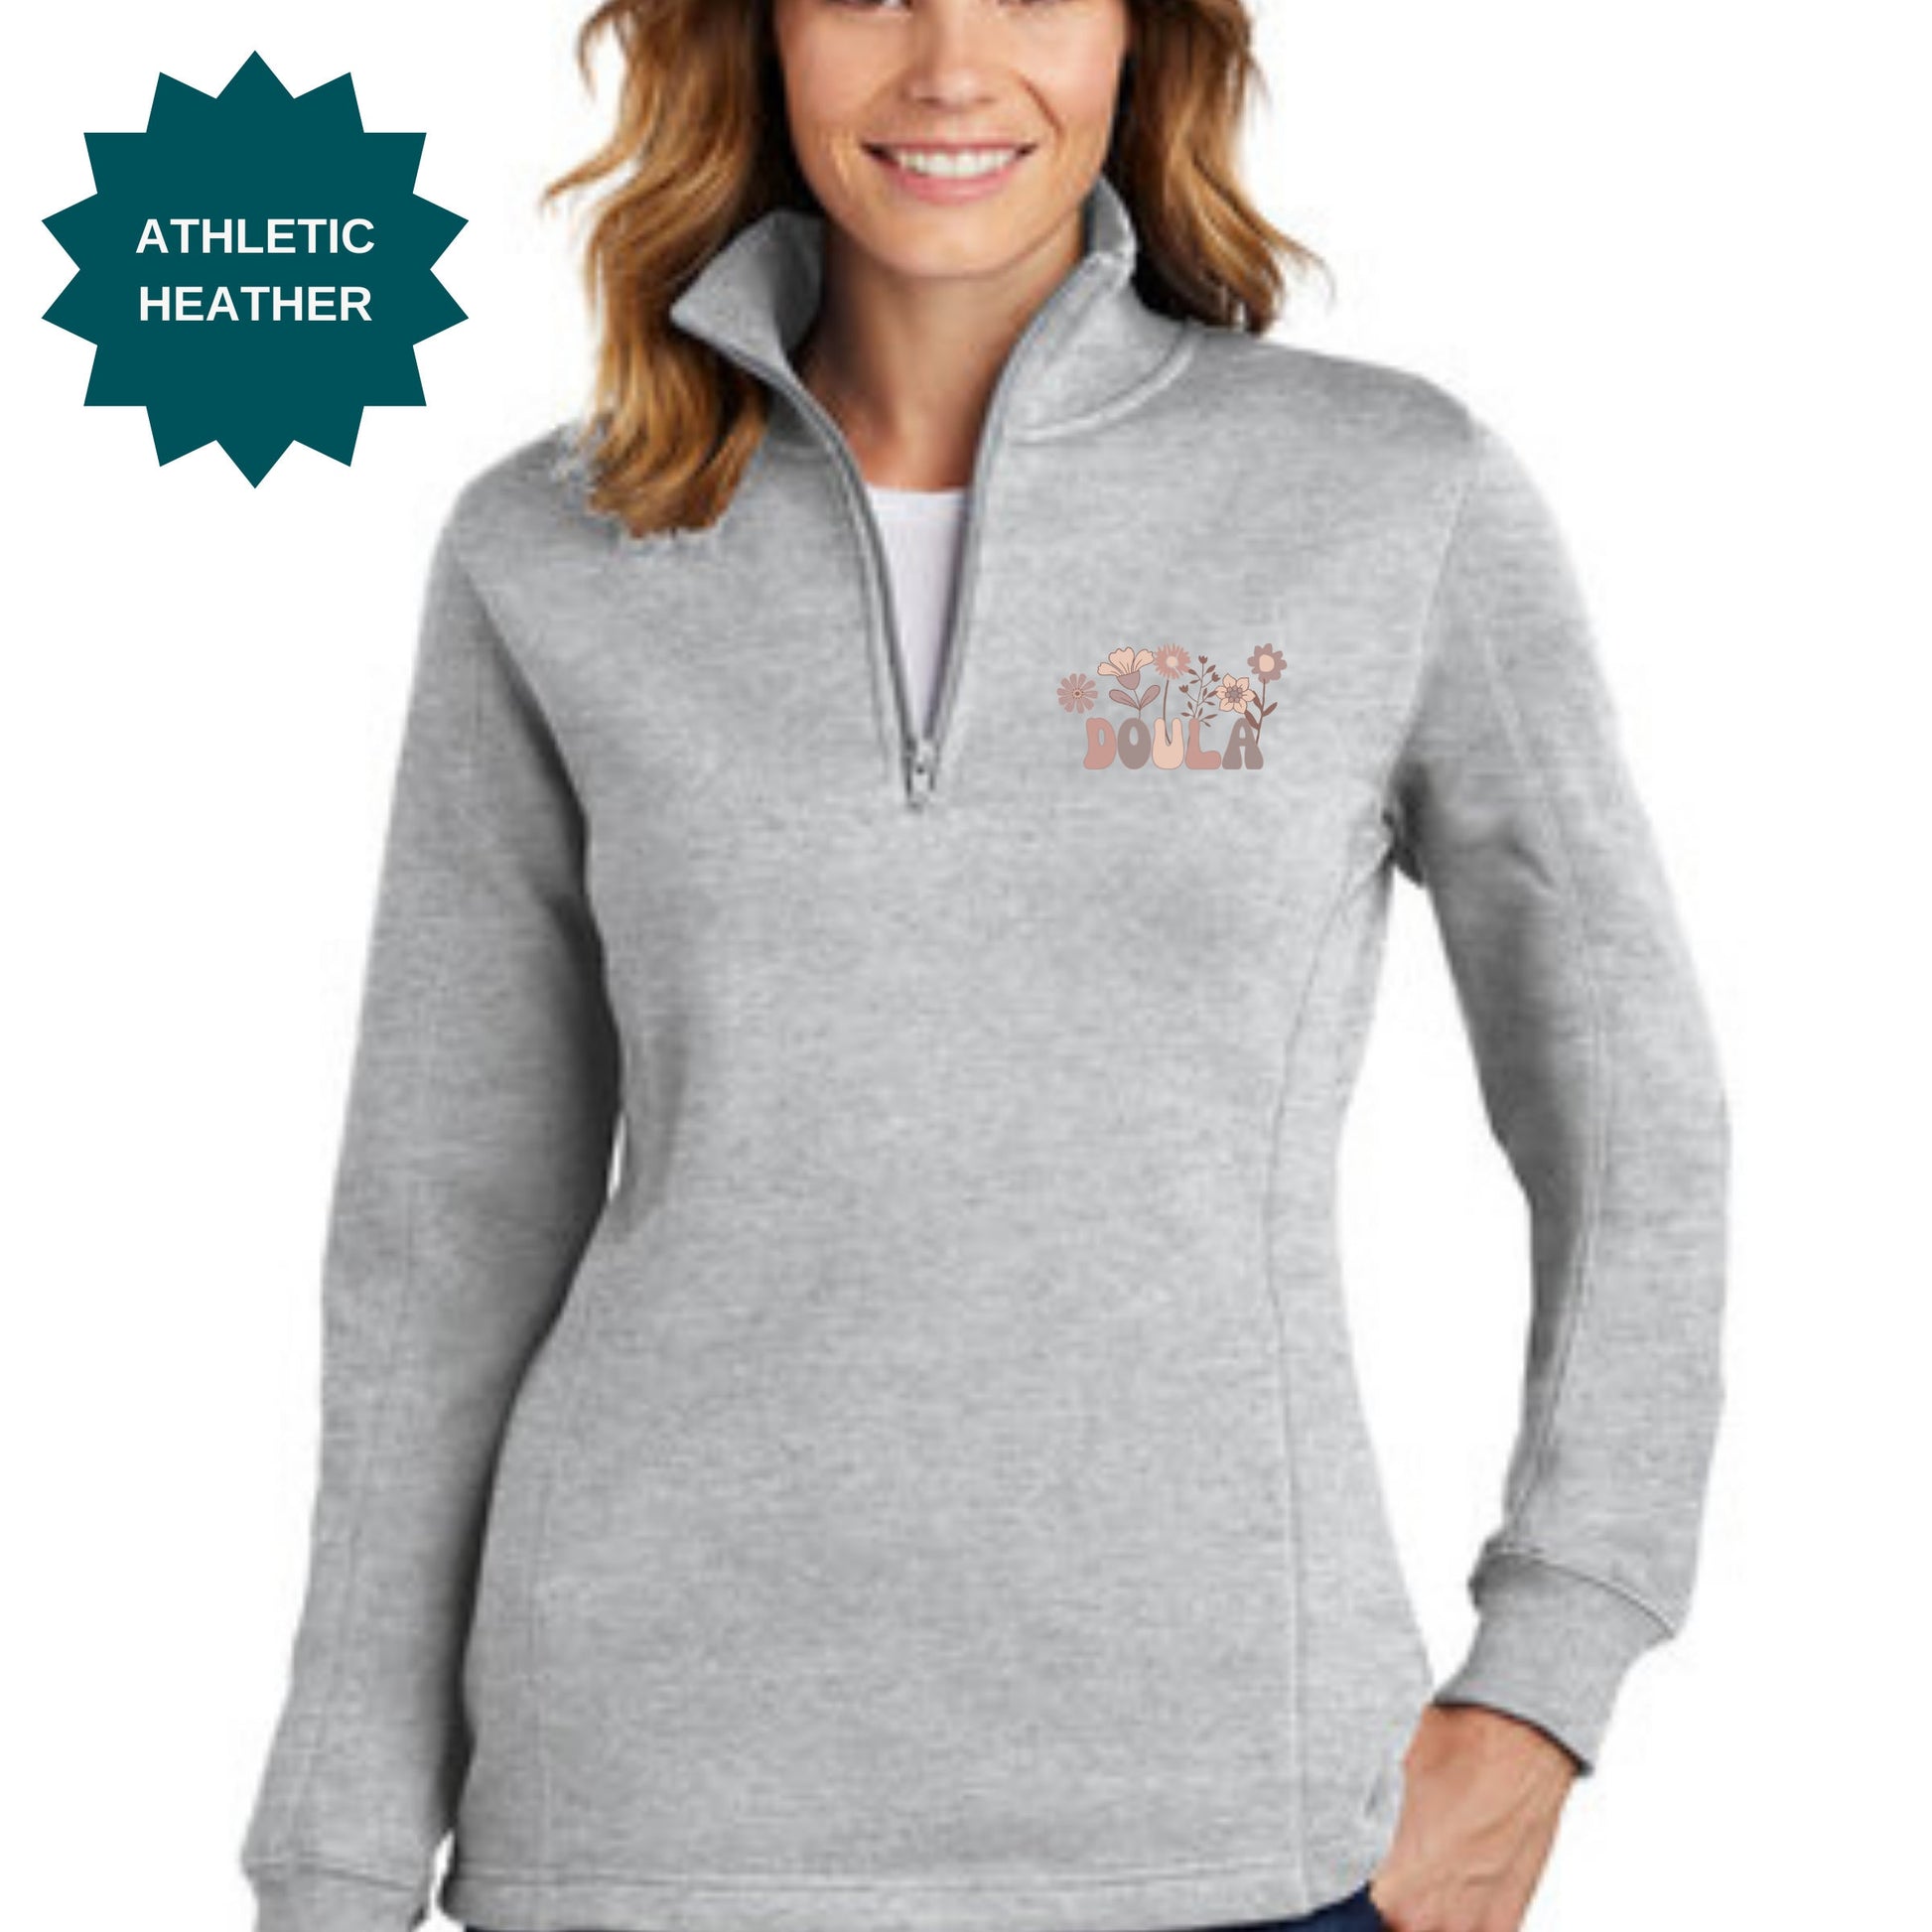 Doula Sweatshirt, Doula Gift, Doula Business, Womens 1/4 Zip LST253 Pullover - Mardonyx Sweatshirt Athletic Heather / X-Small